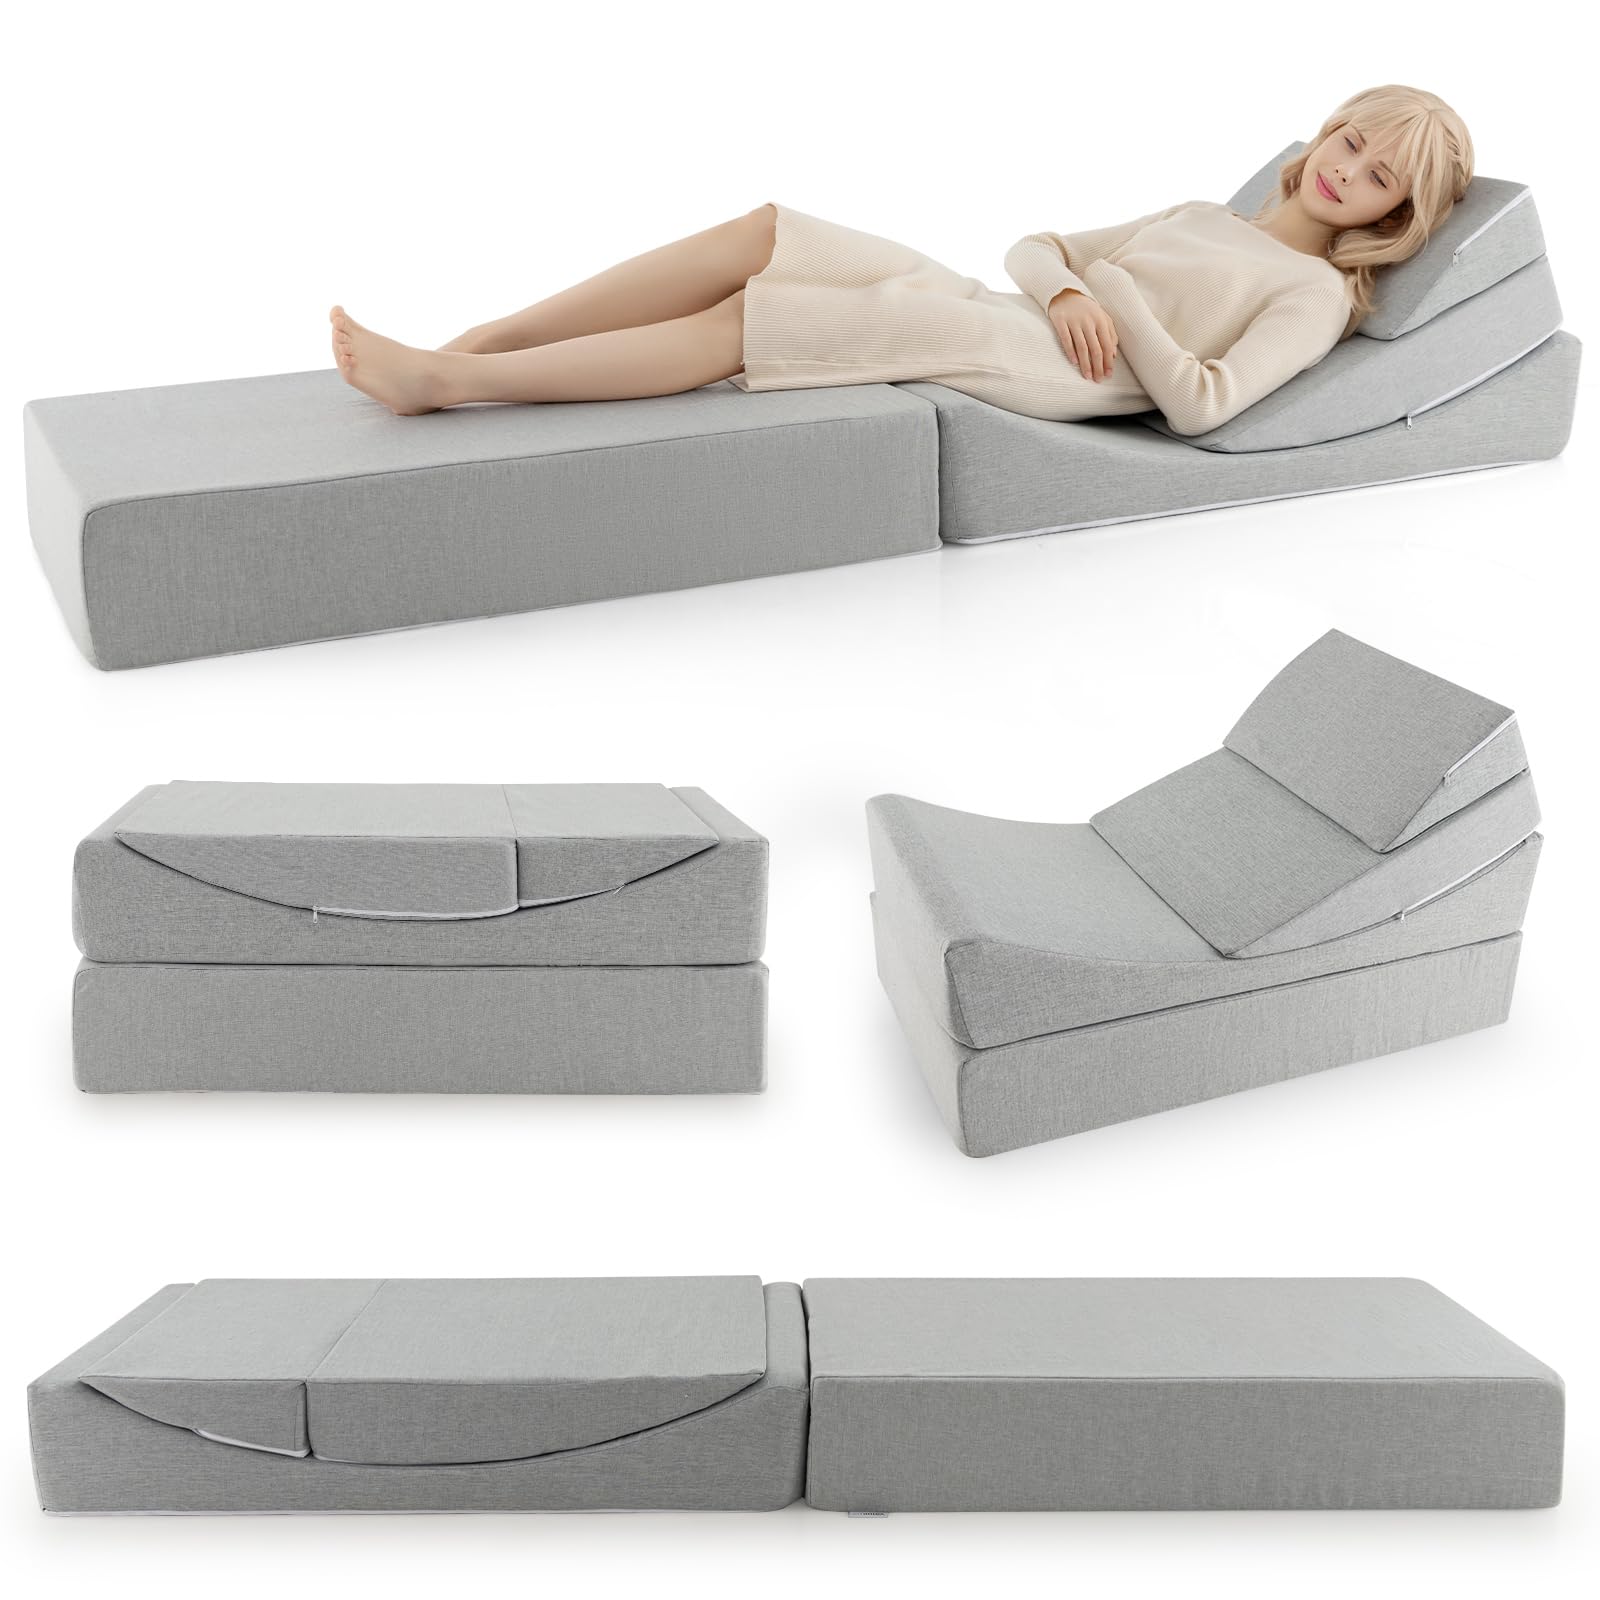 4-in-1 Floor Futon Sleeper Chair with High-Density Foam - Giantex